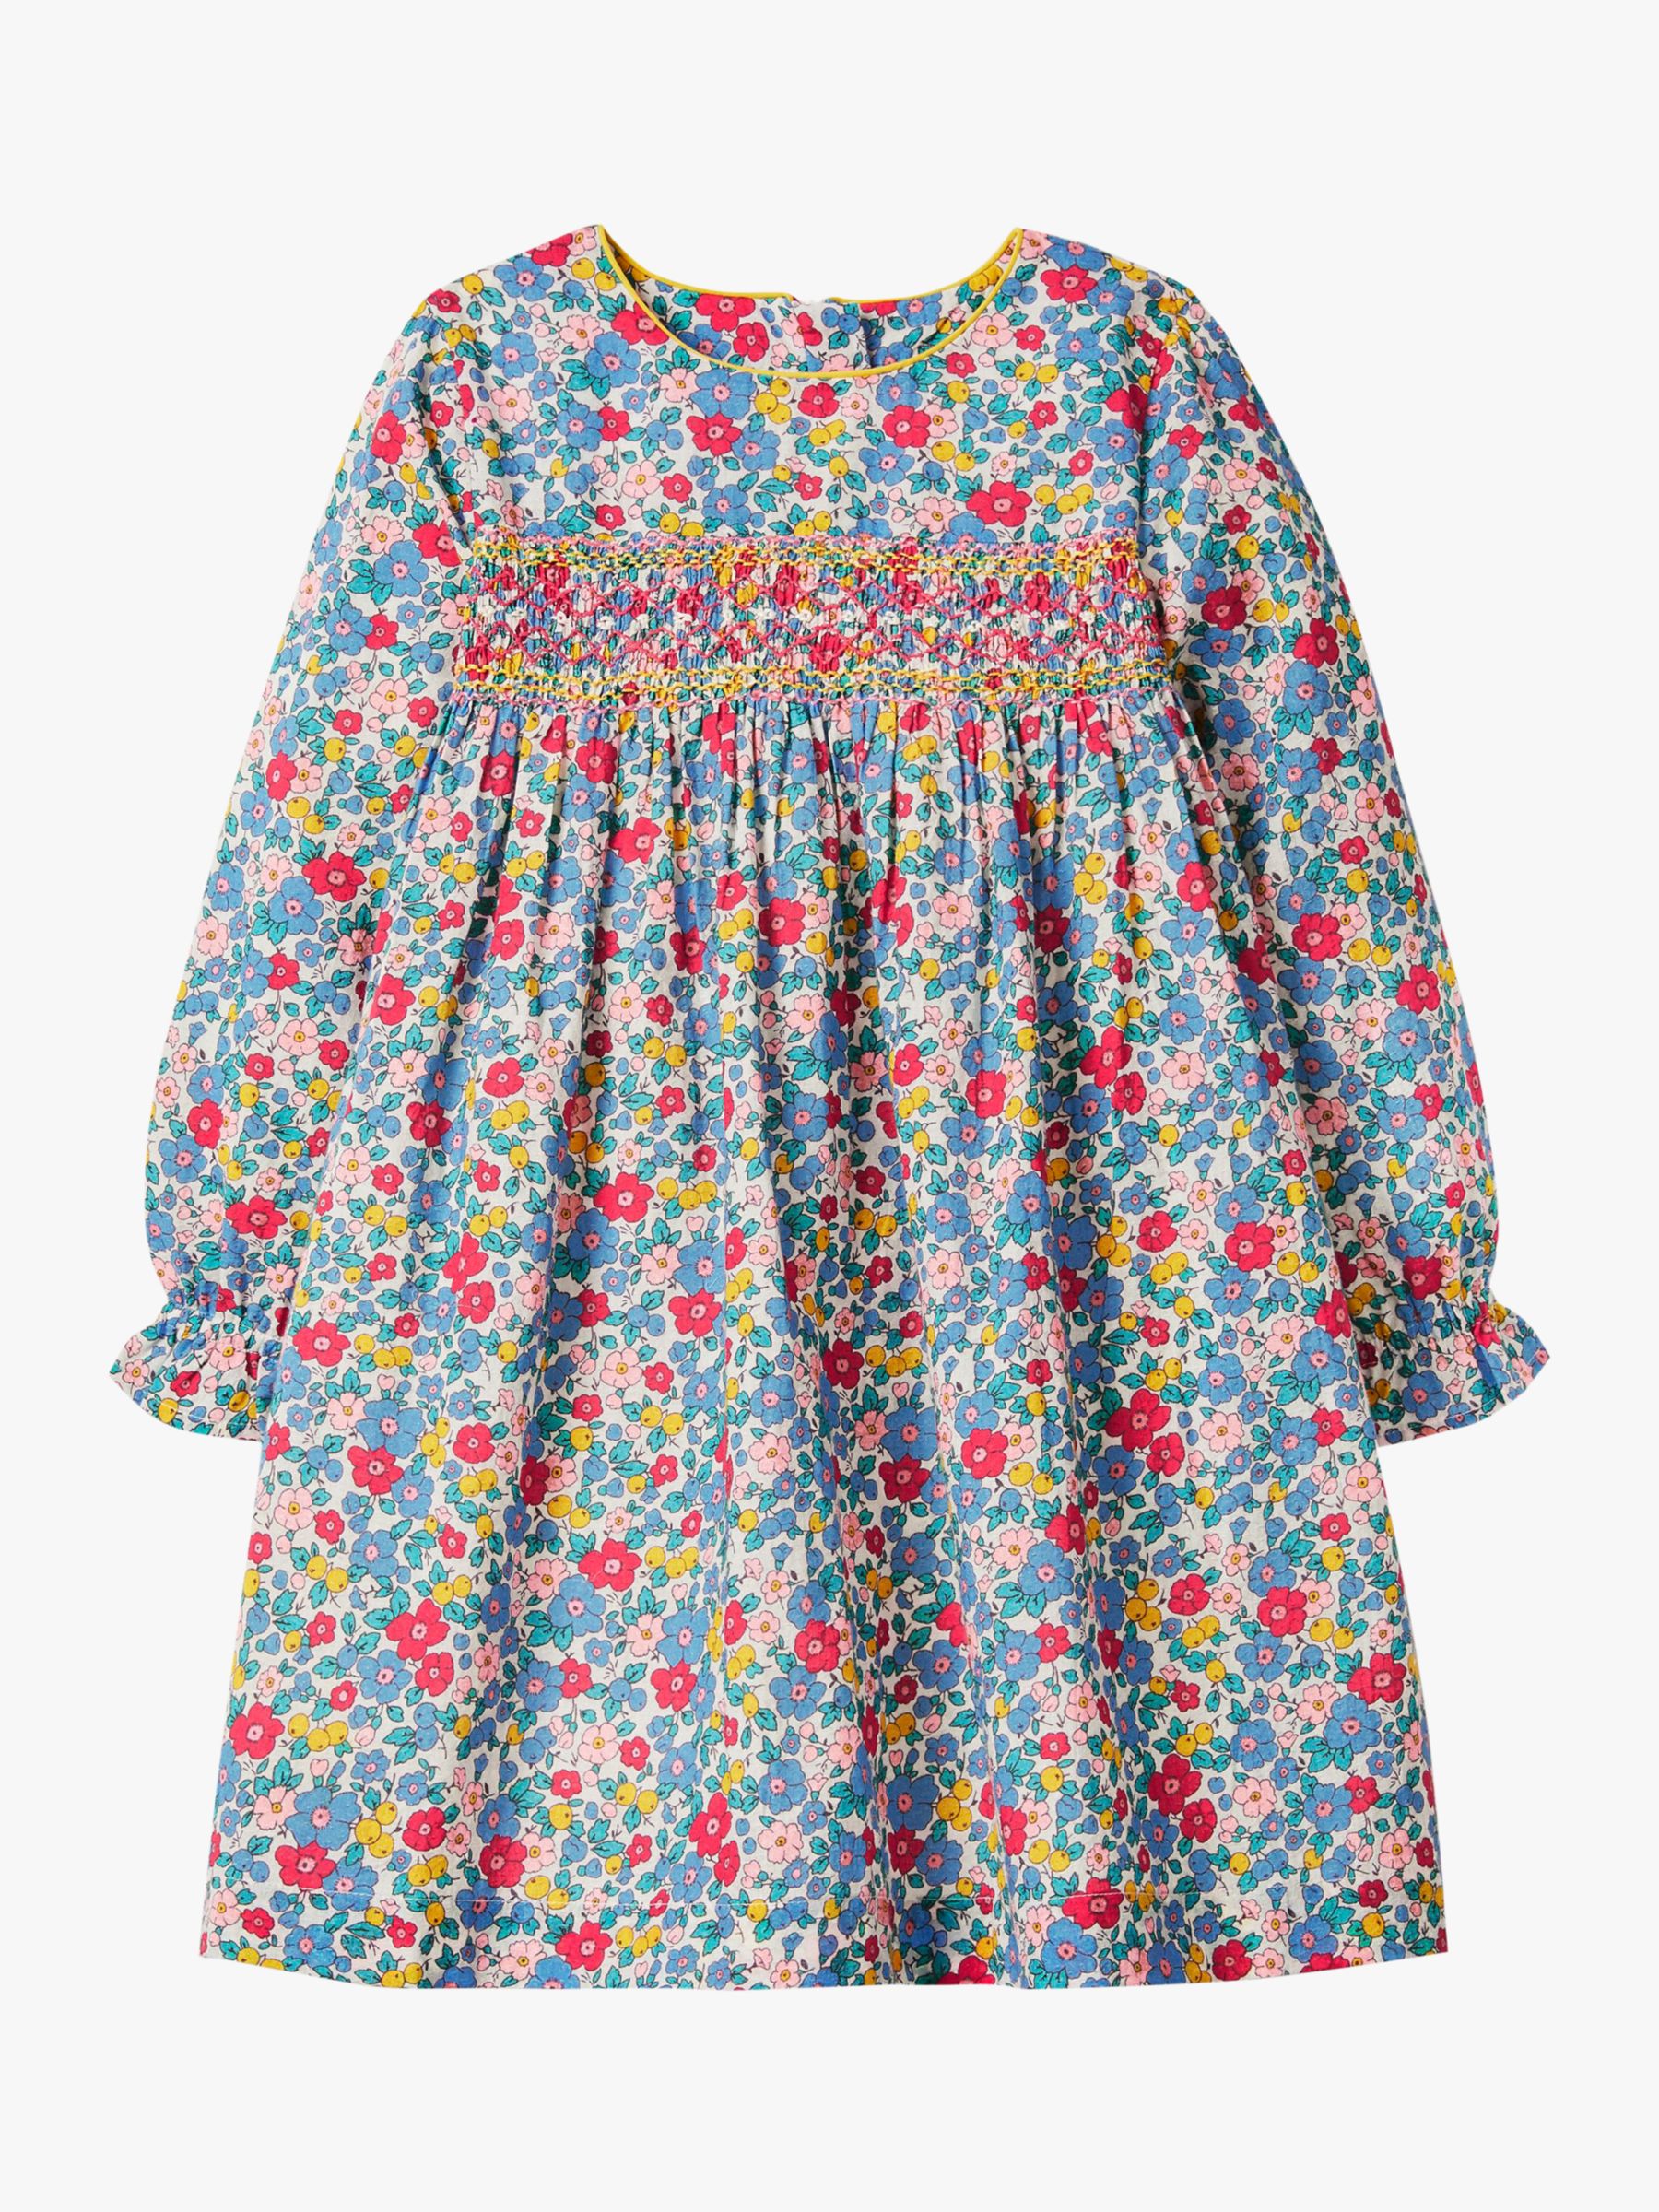 Mini Boden Kids' Apple Floral Smocked Dress, Multi